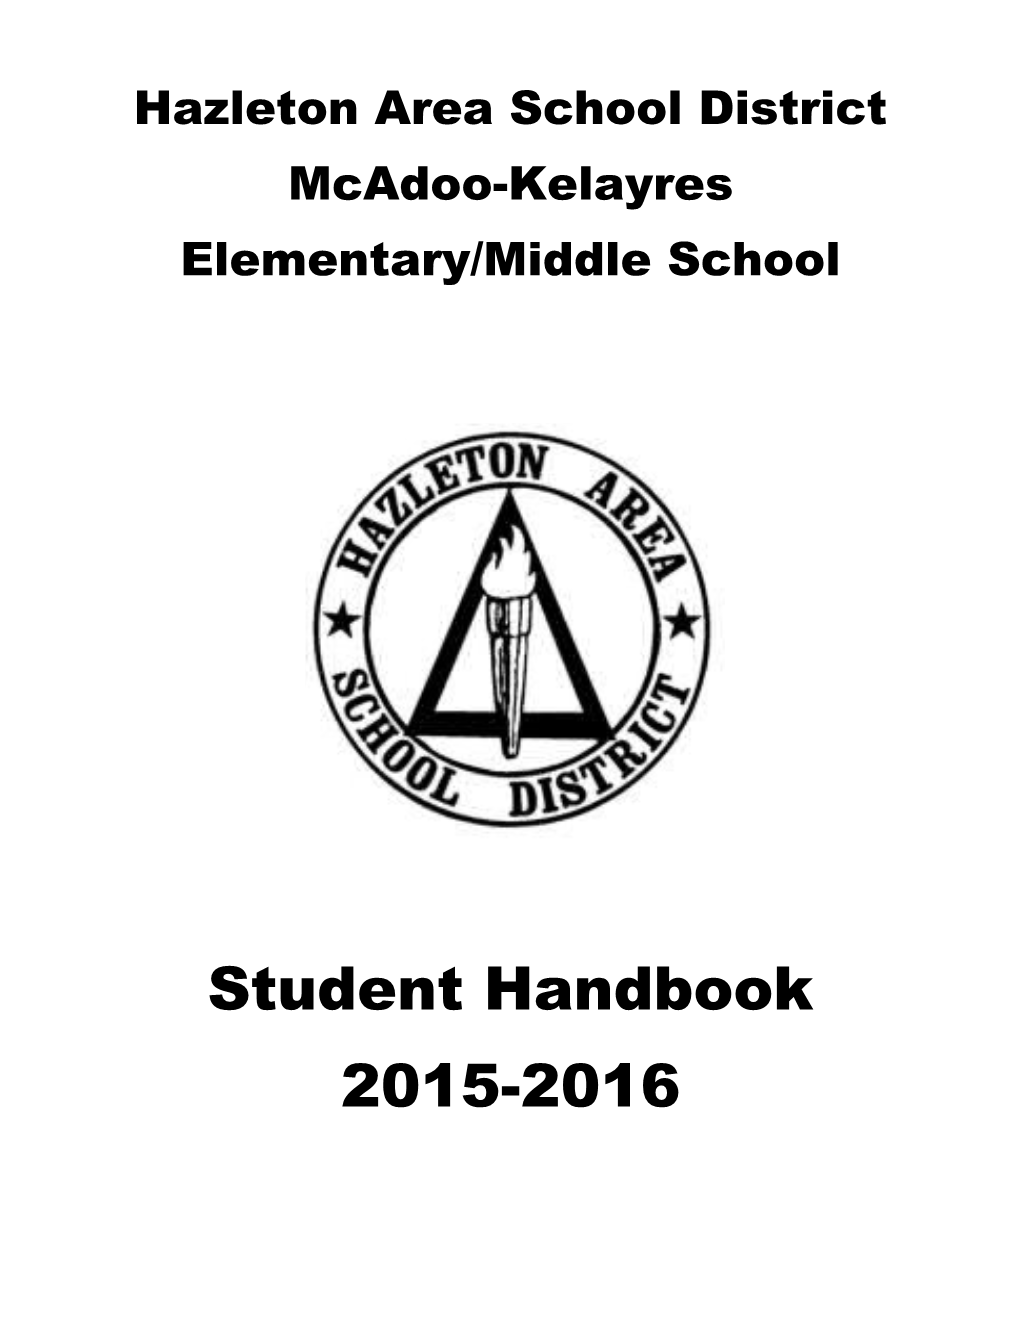 Mcadoo-Kelayres Elementary/Middle School